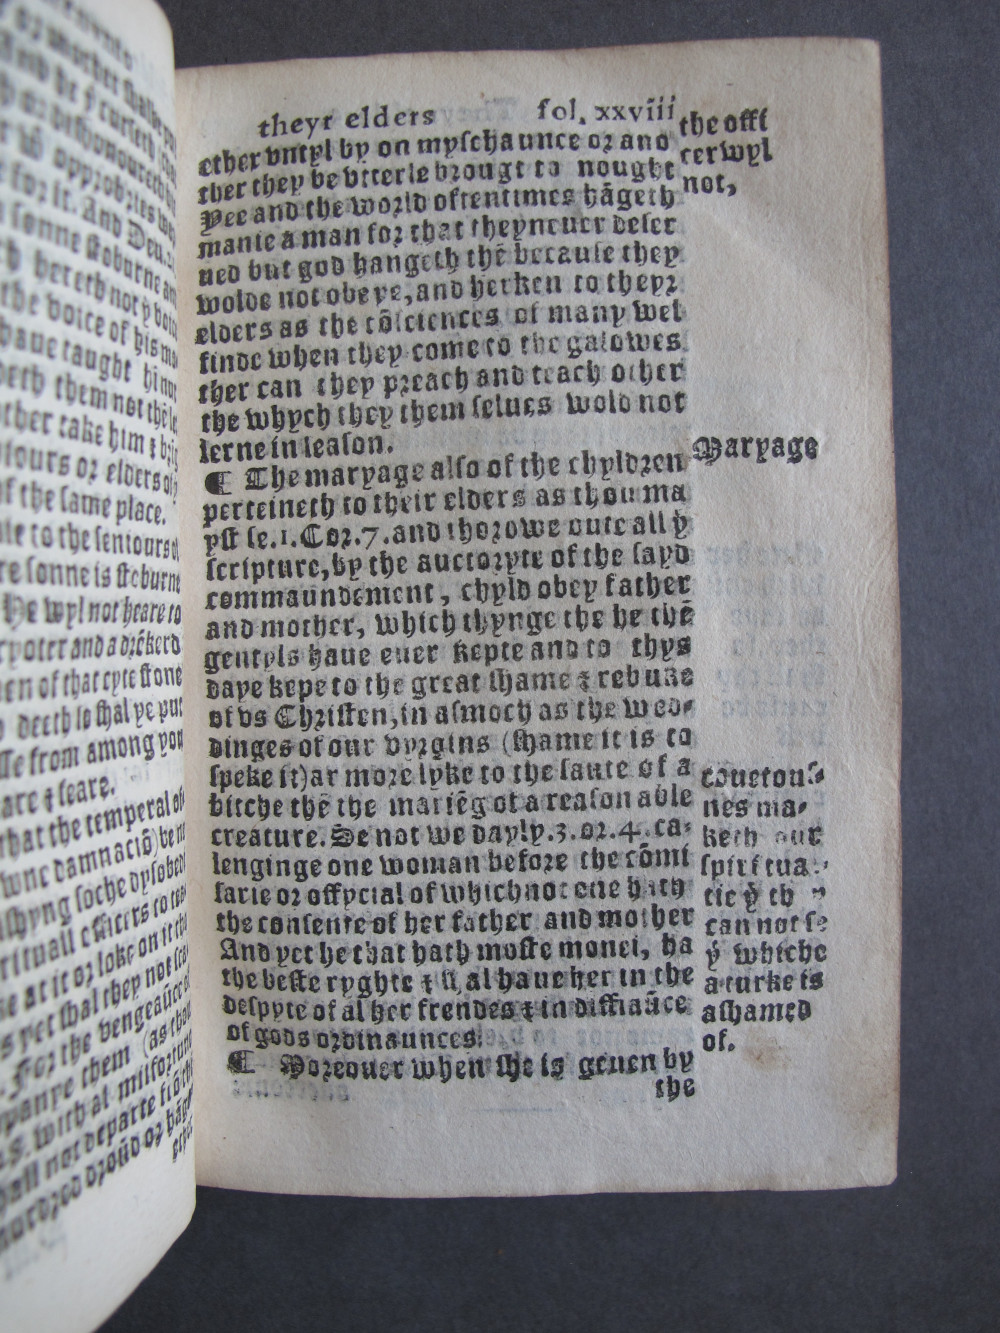 1 Folio D4 recto